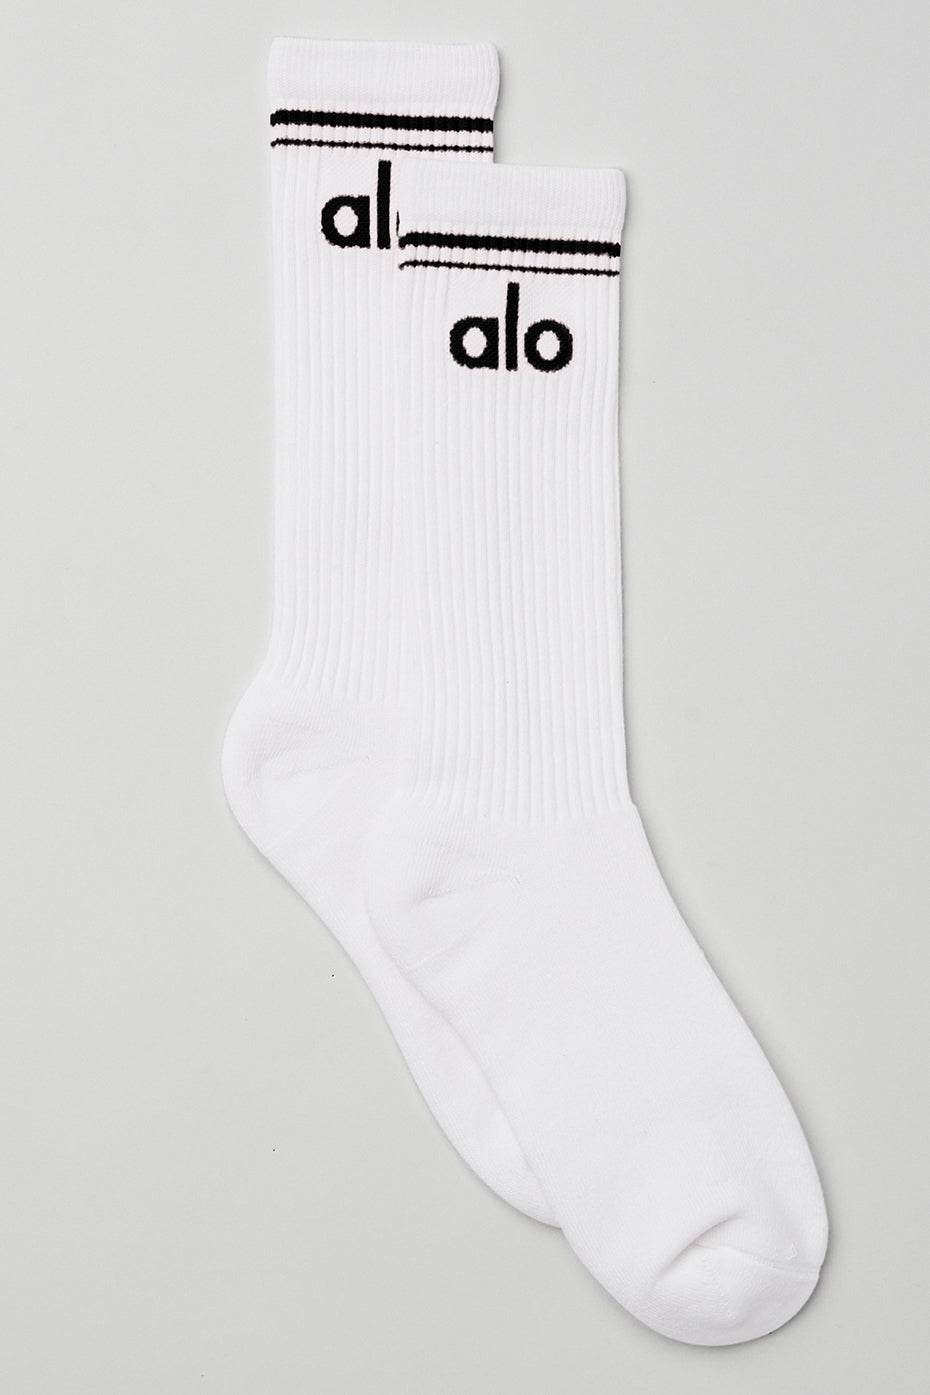 All the Alo socks